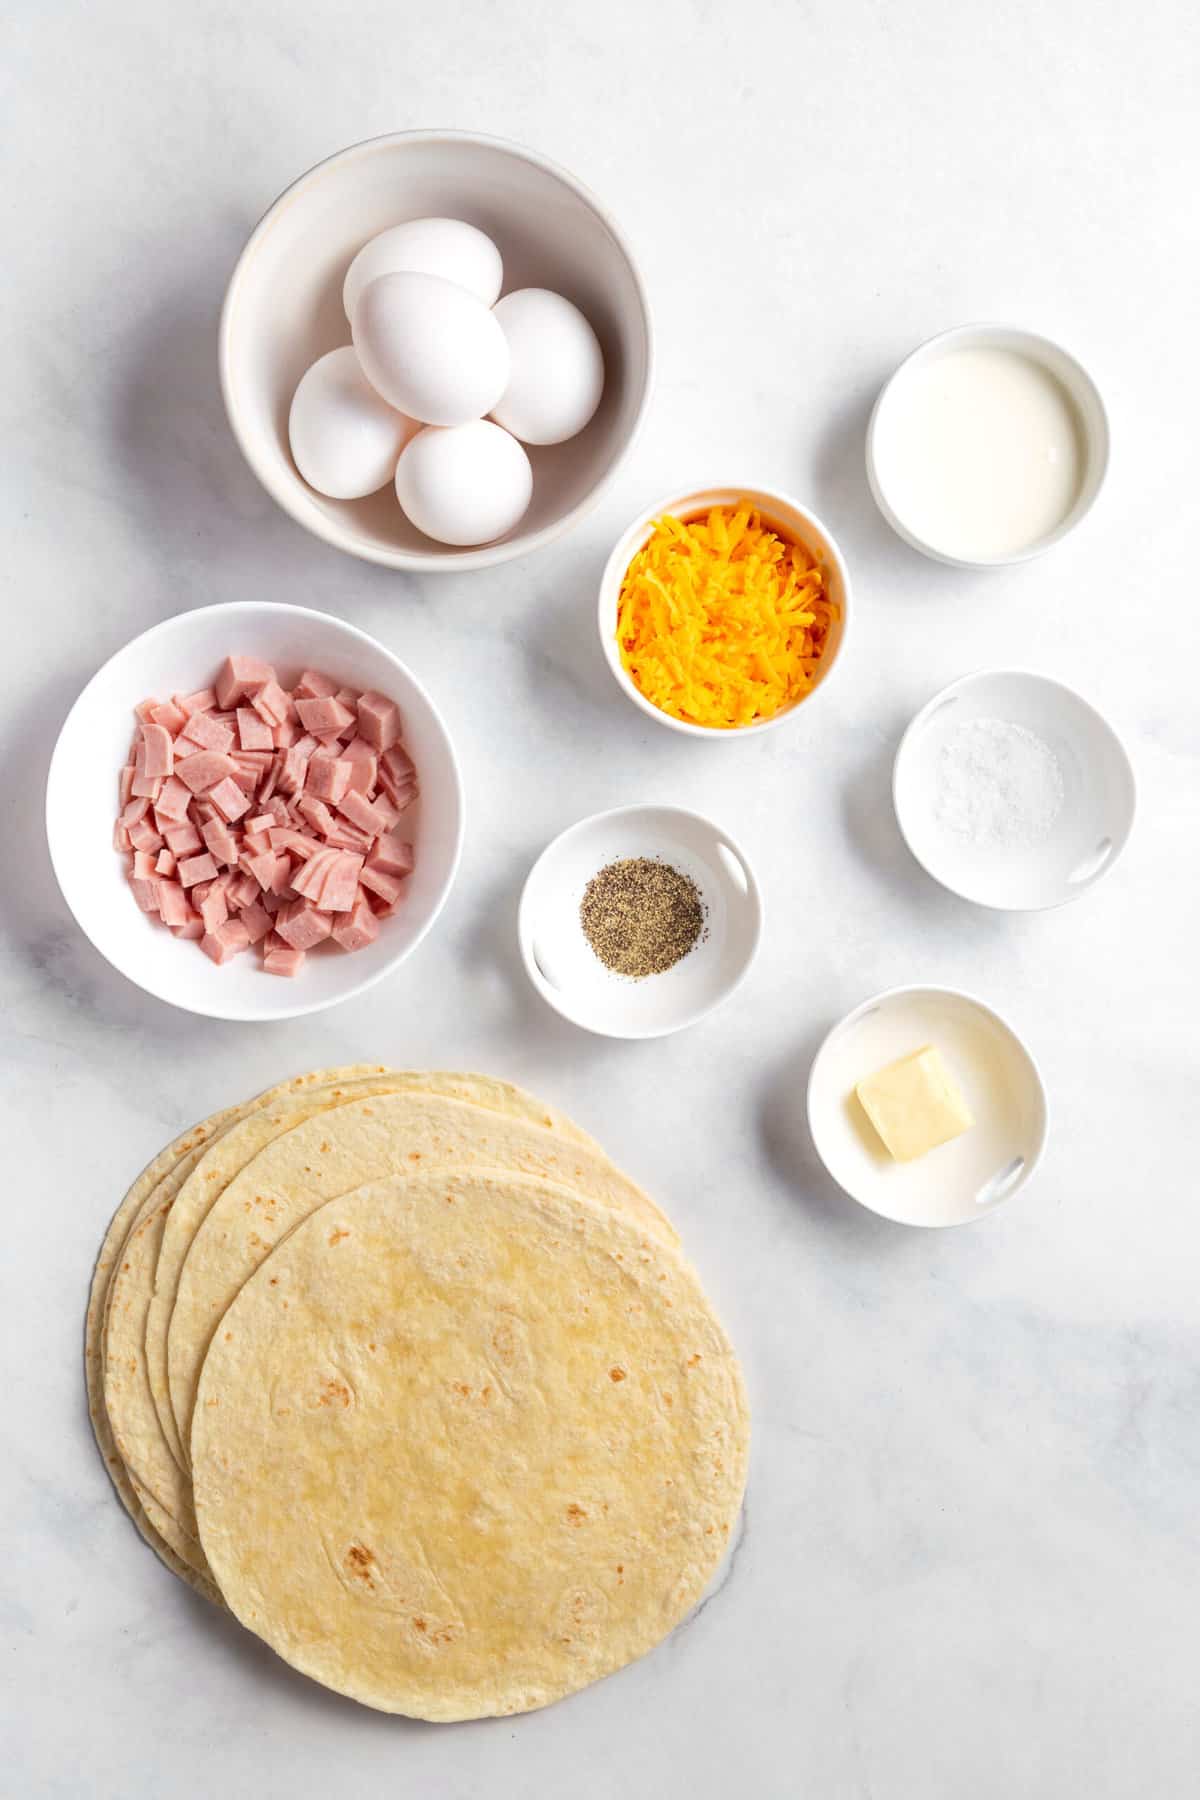 ingredients to make ham and cheese burritos